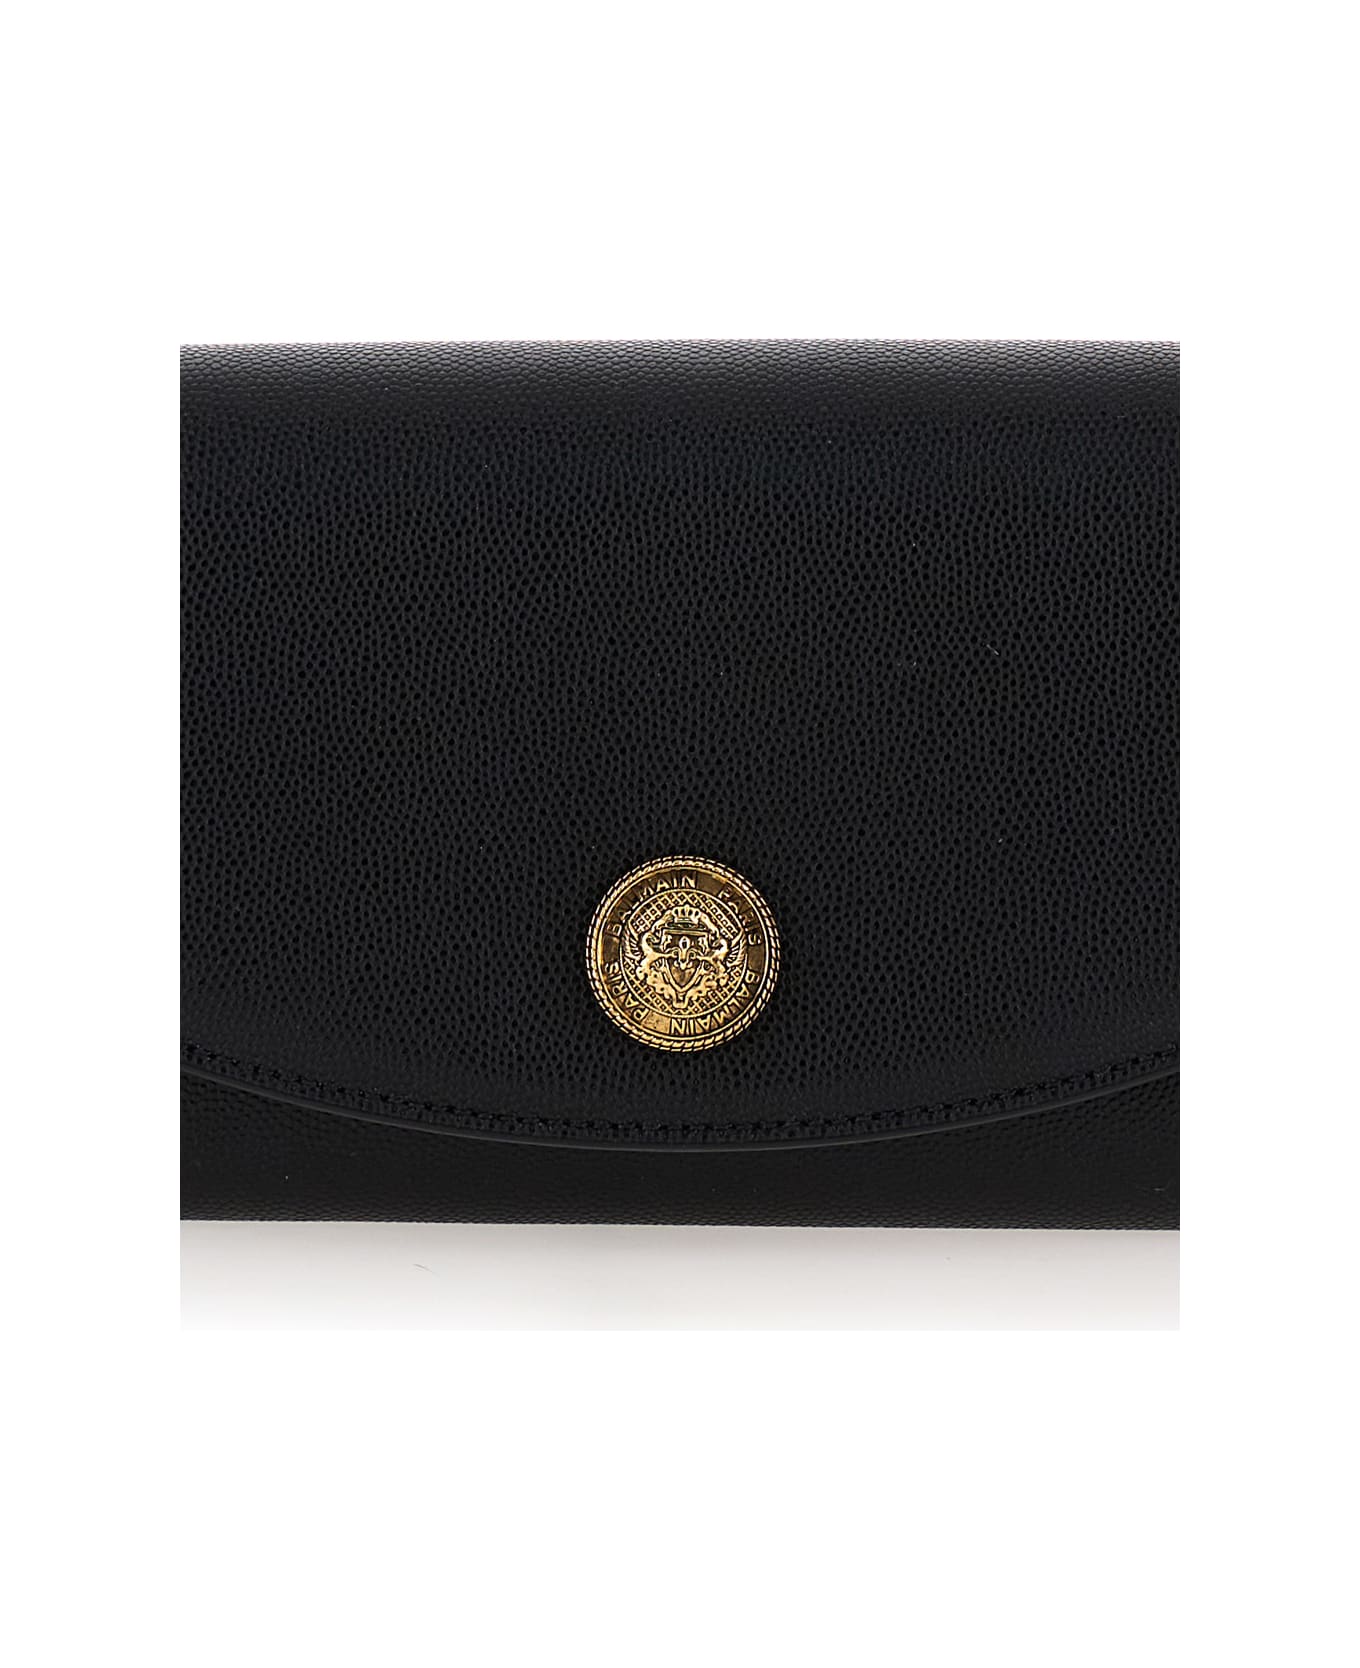 Balmain 'emblème' Black Clutch With Balmain Coin Detail In Grained Leather Woman - Black